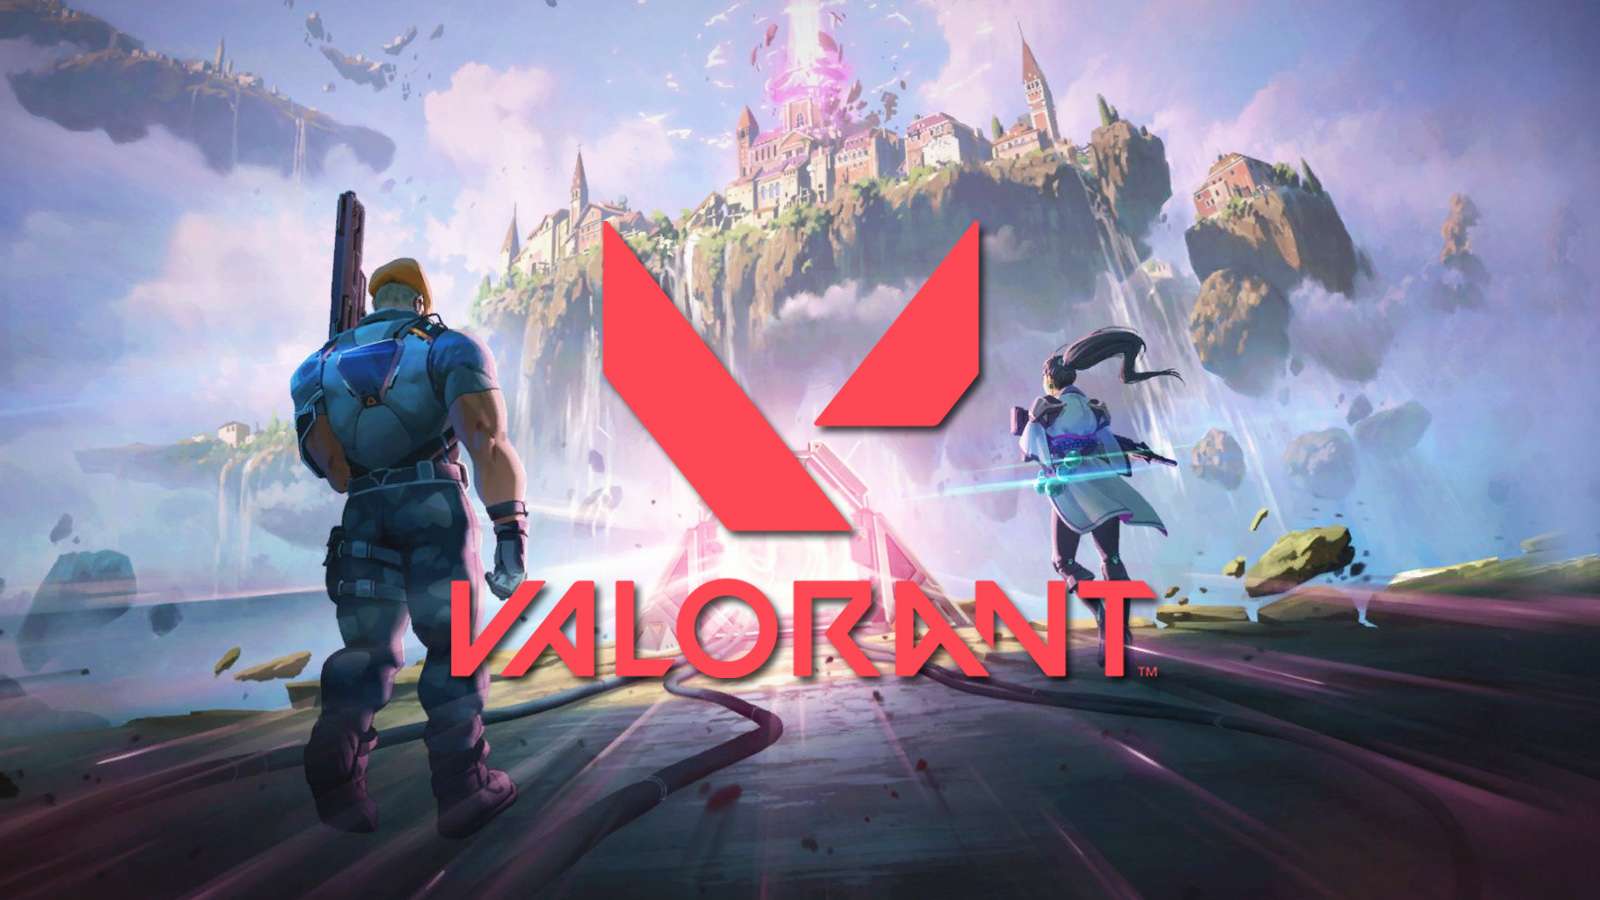 Valorant rating system plan revealed by Riot dev